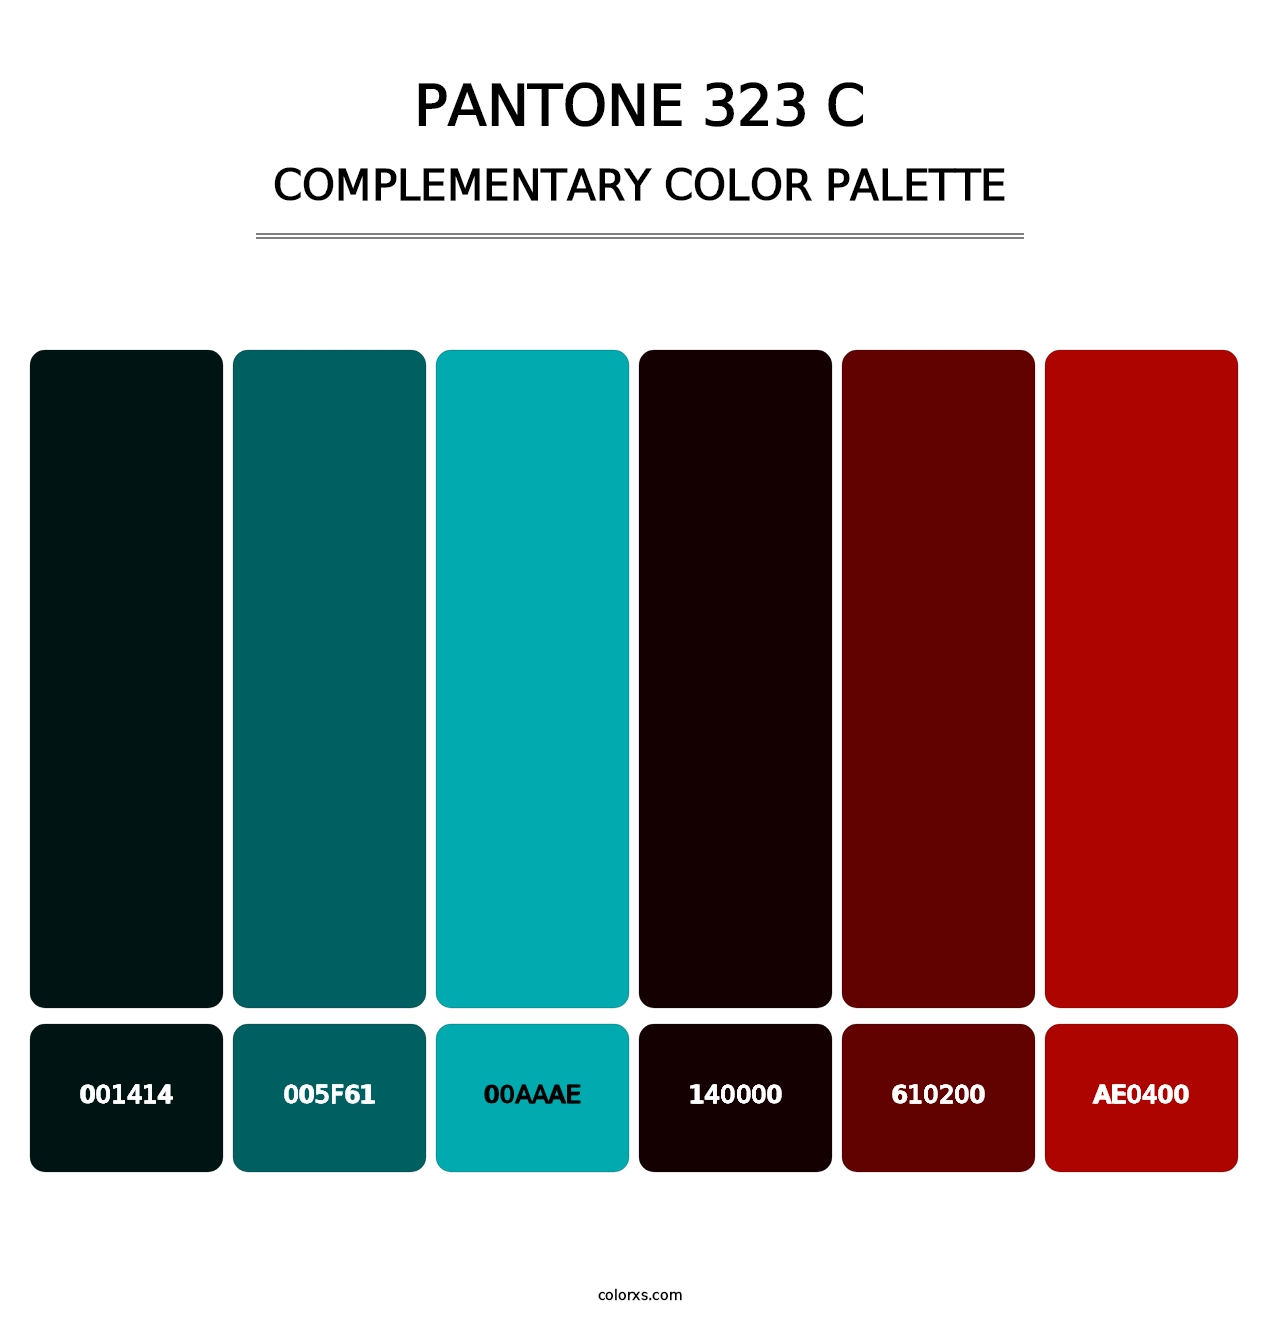 PANTONE 323 C - Complementary Color Palette